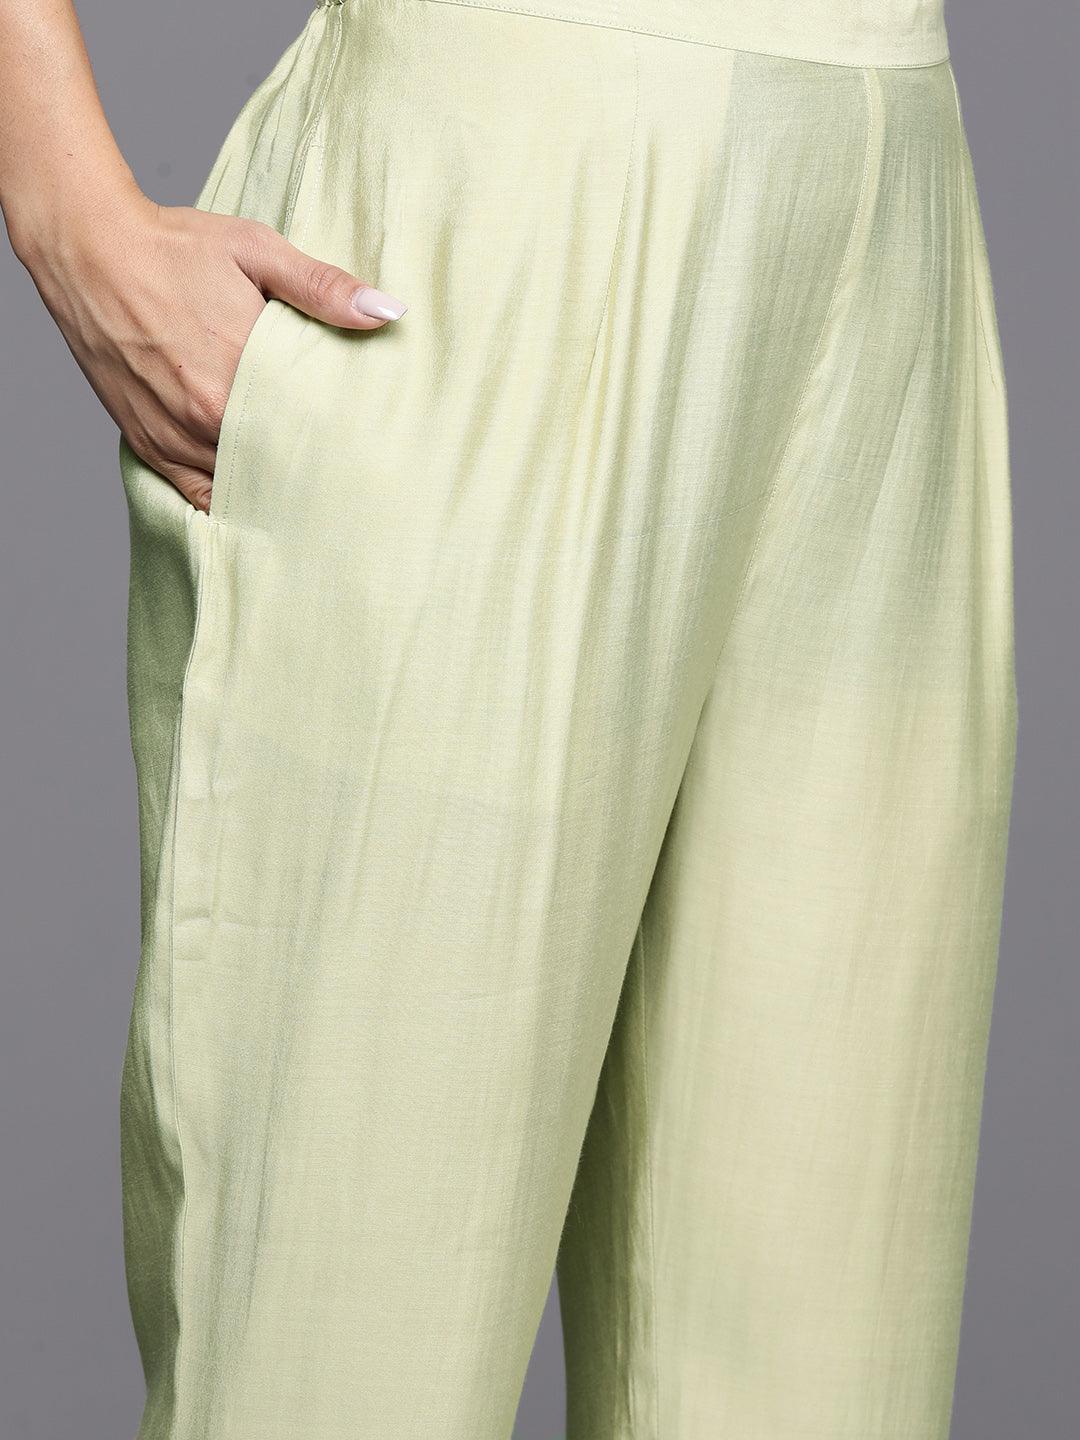 Green Yoke Design Silk Blend A-Line Kurta With Trousers & Dupatta - Libas